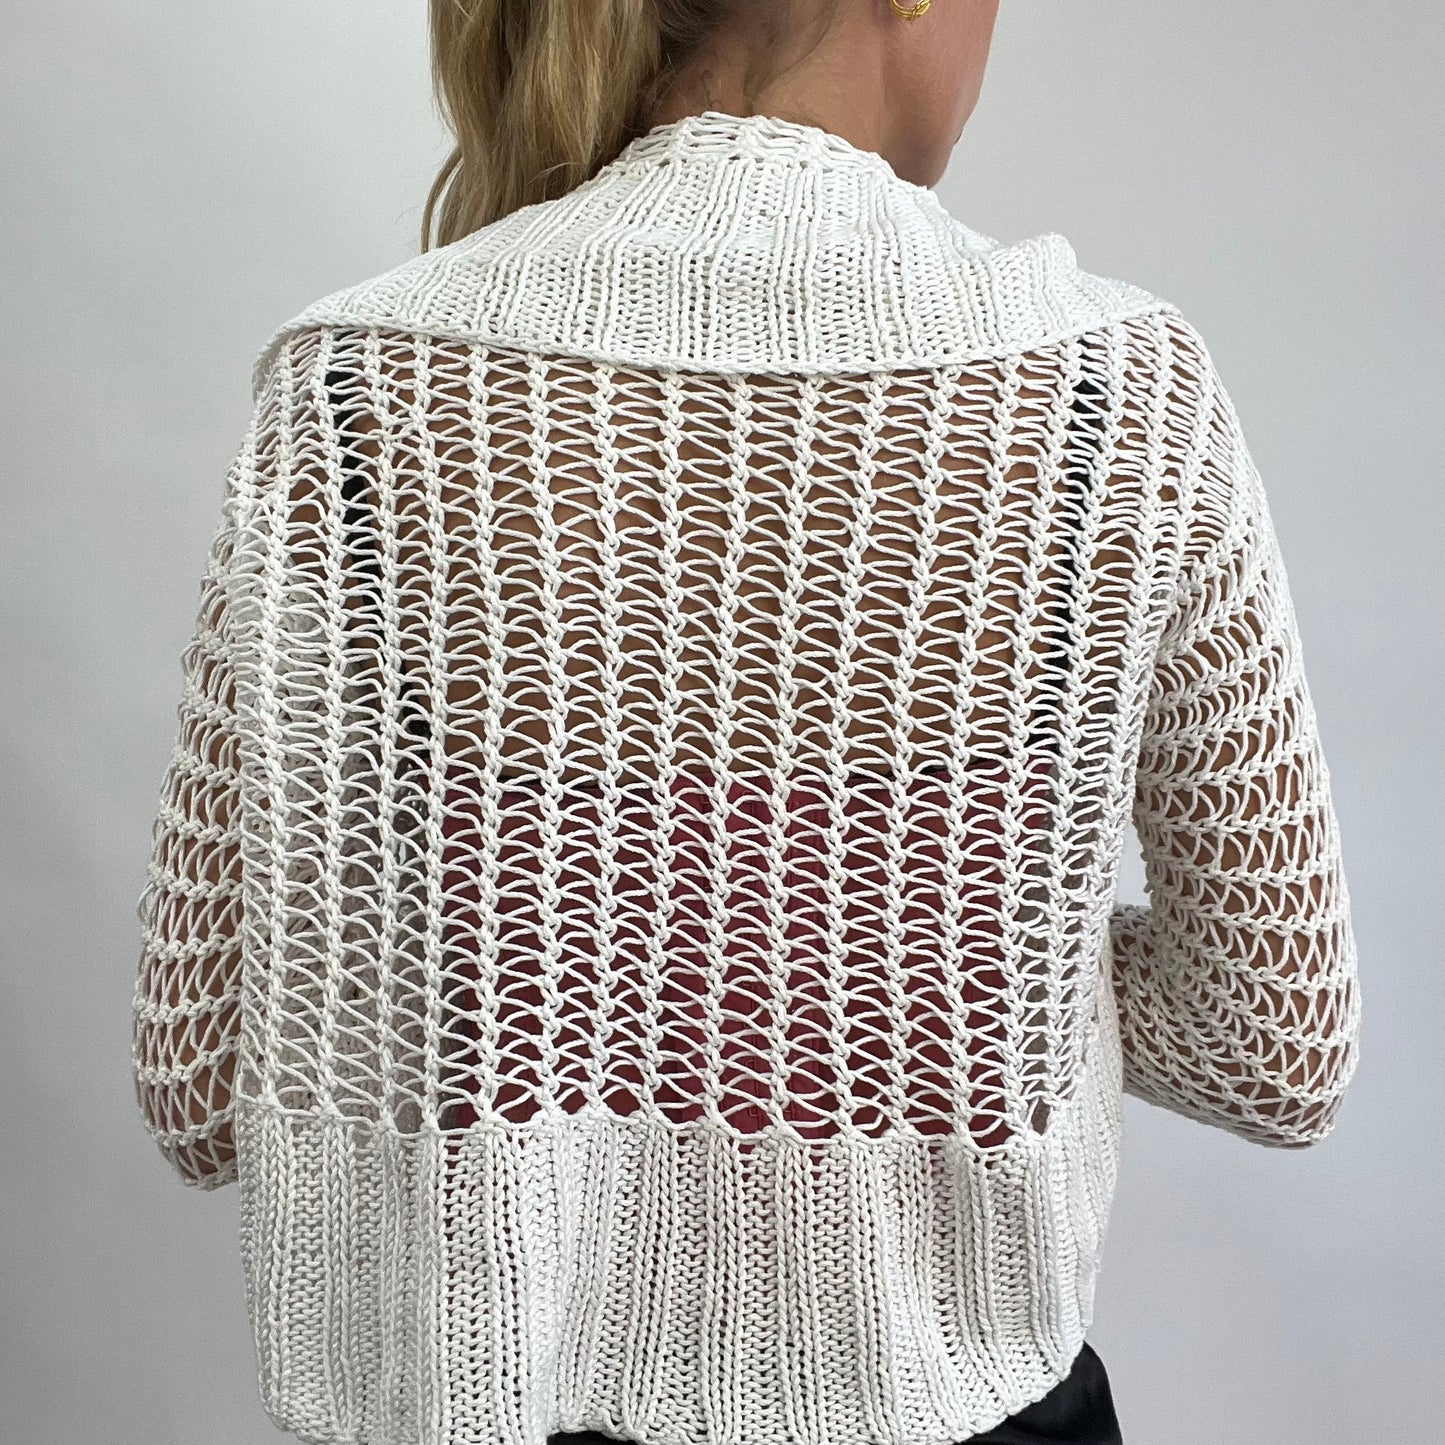 CARRIE BRADSHAW DROP | small white crochet shrug